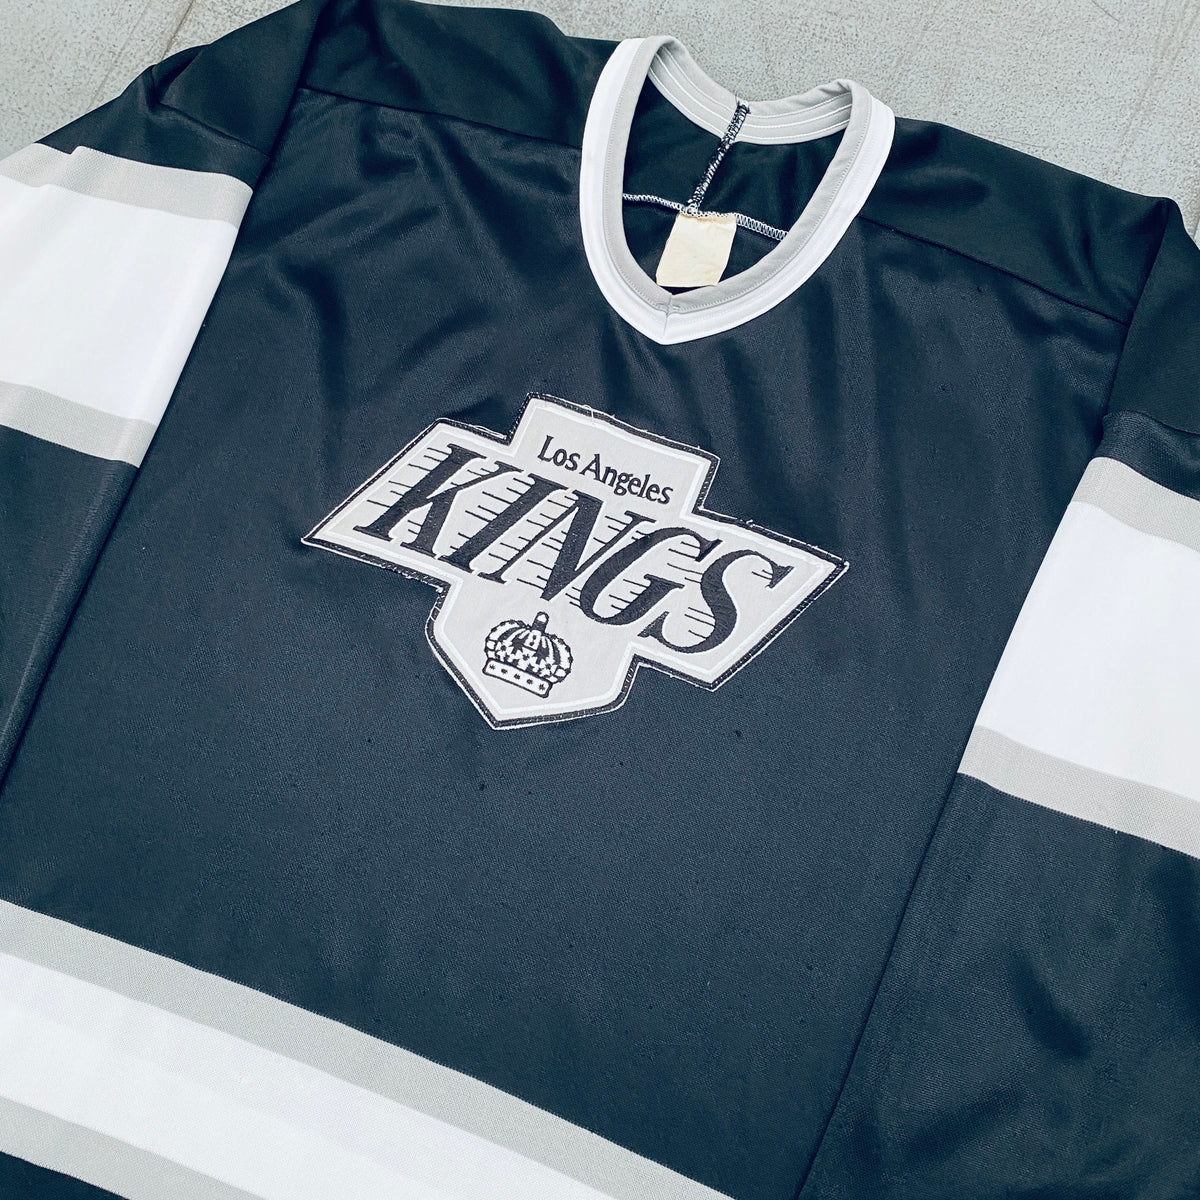 Vintage LA King CCM Hockey Jersey 